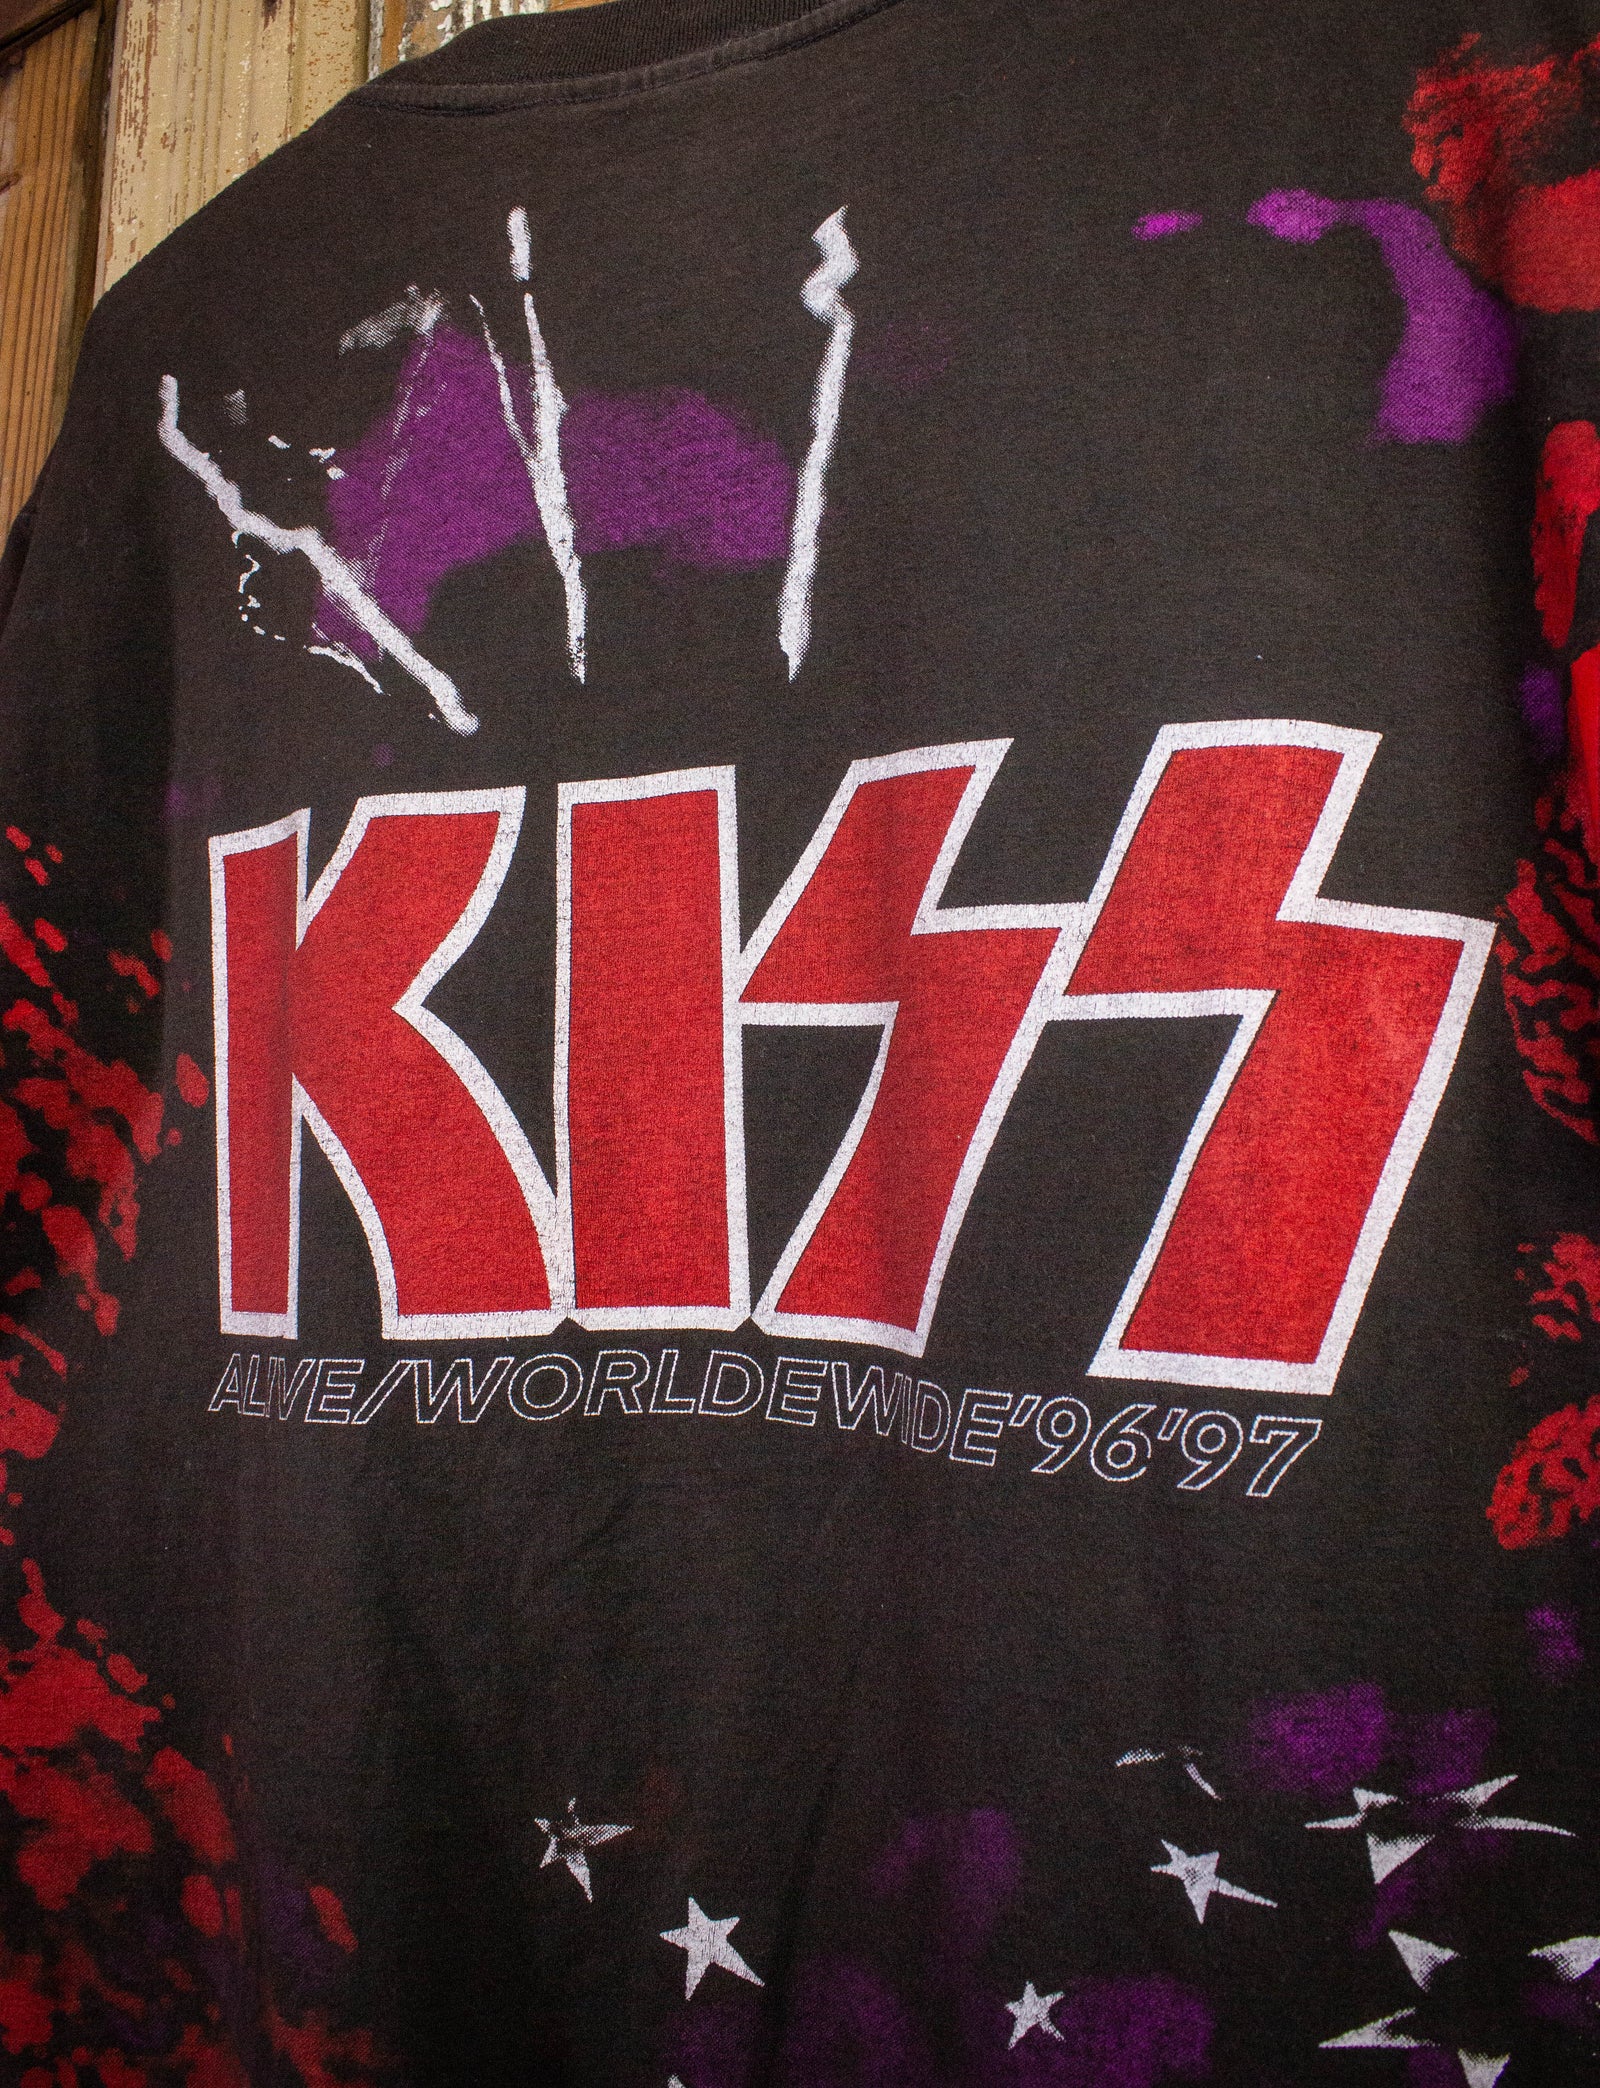 Vintage KISS Alive Worldwide All Over Print Concert T Shirt 1996-97 Black XL